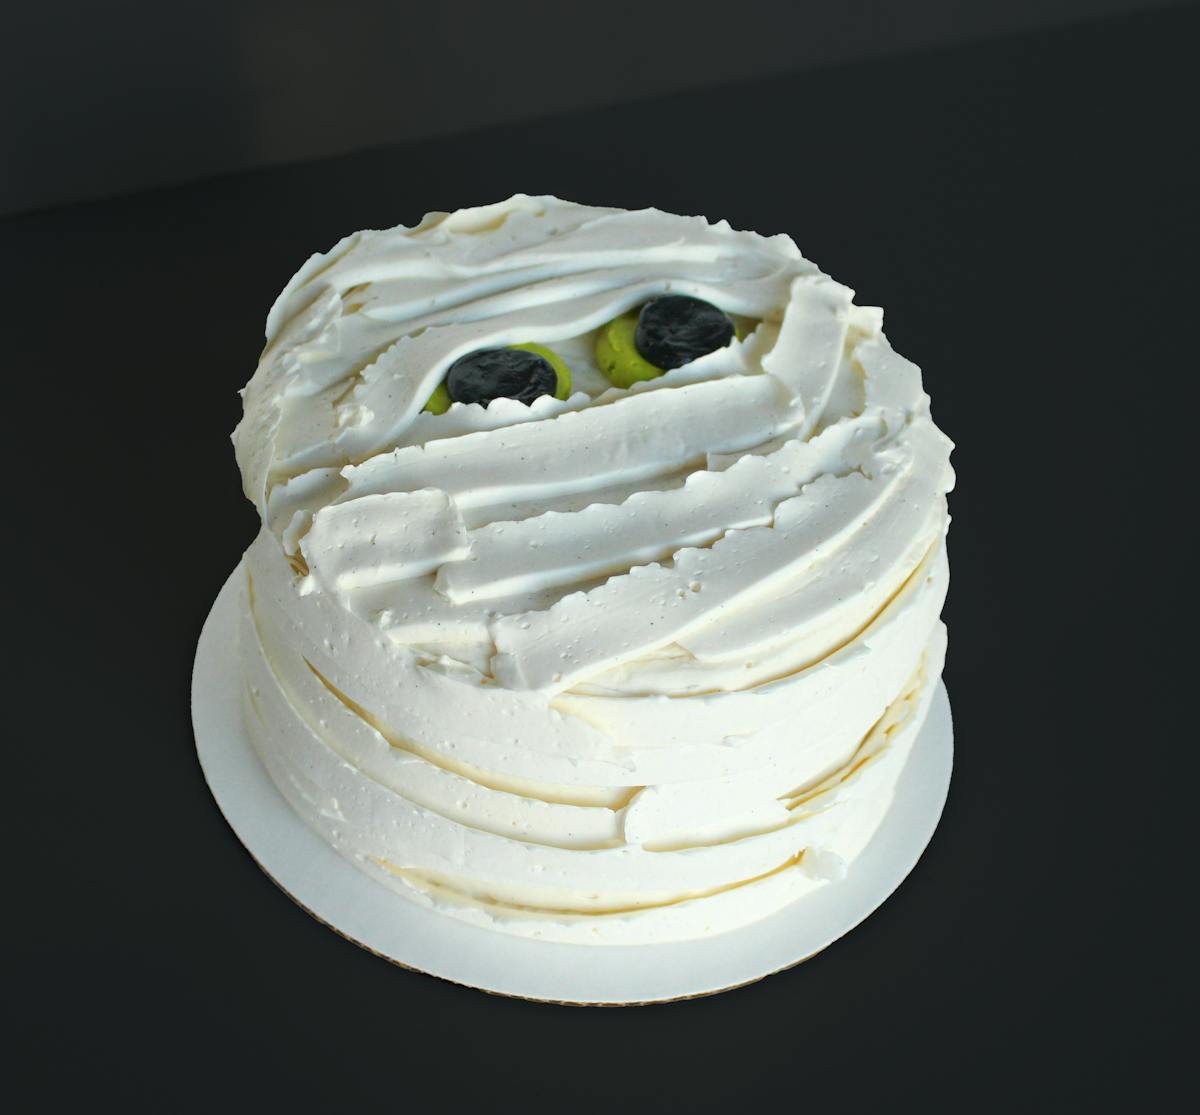 mummy cake